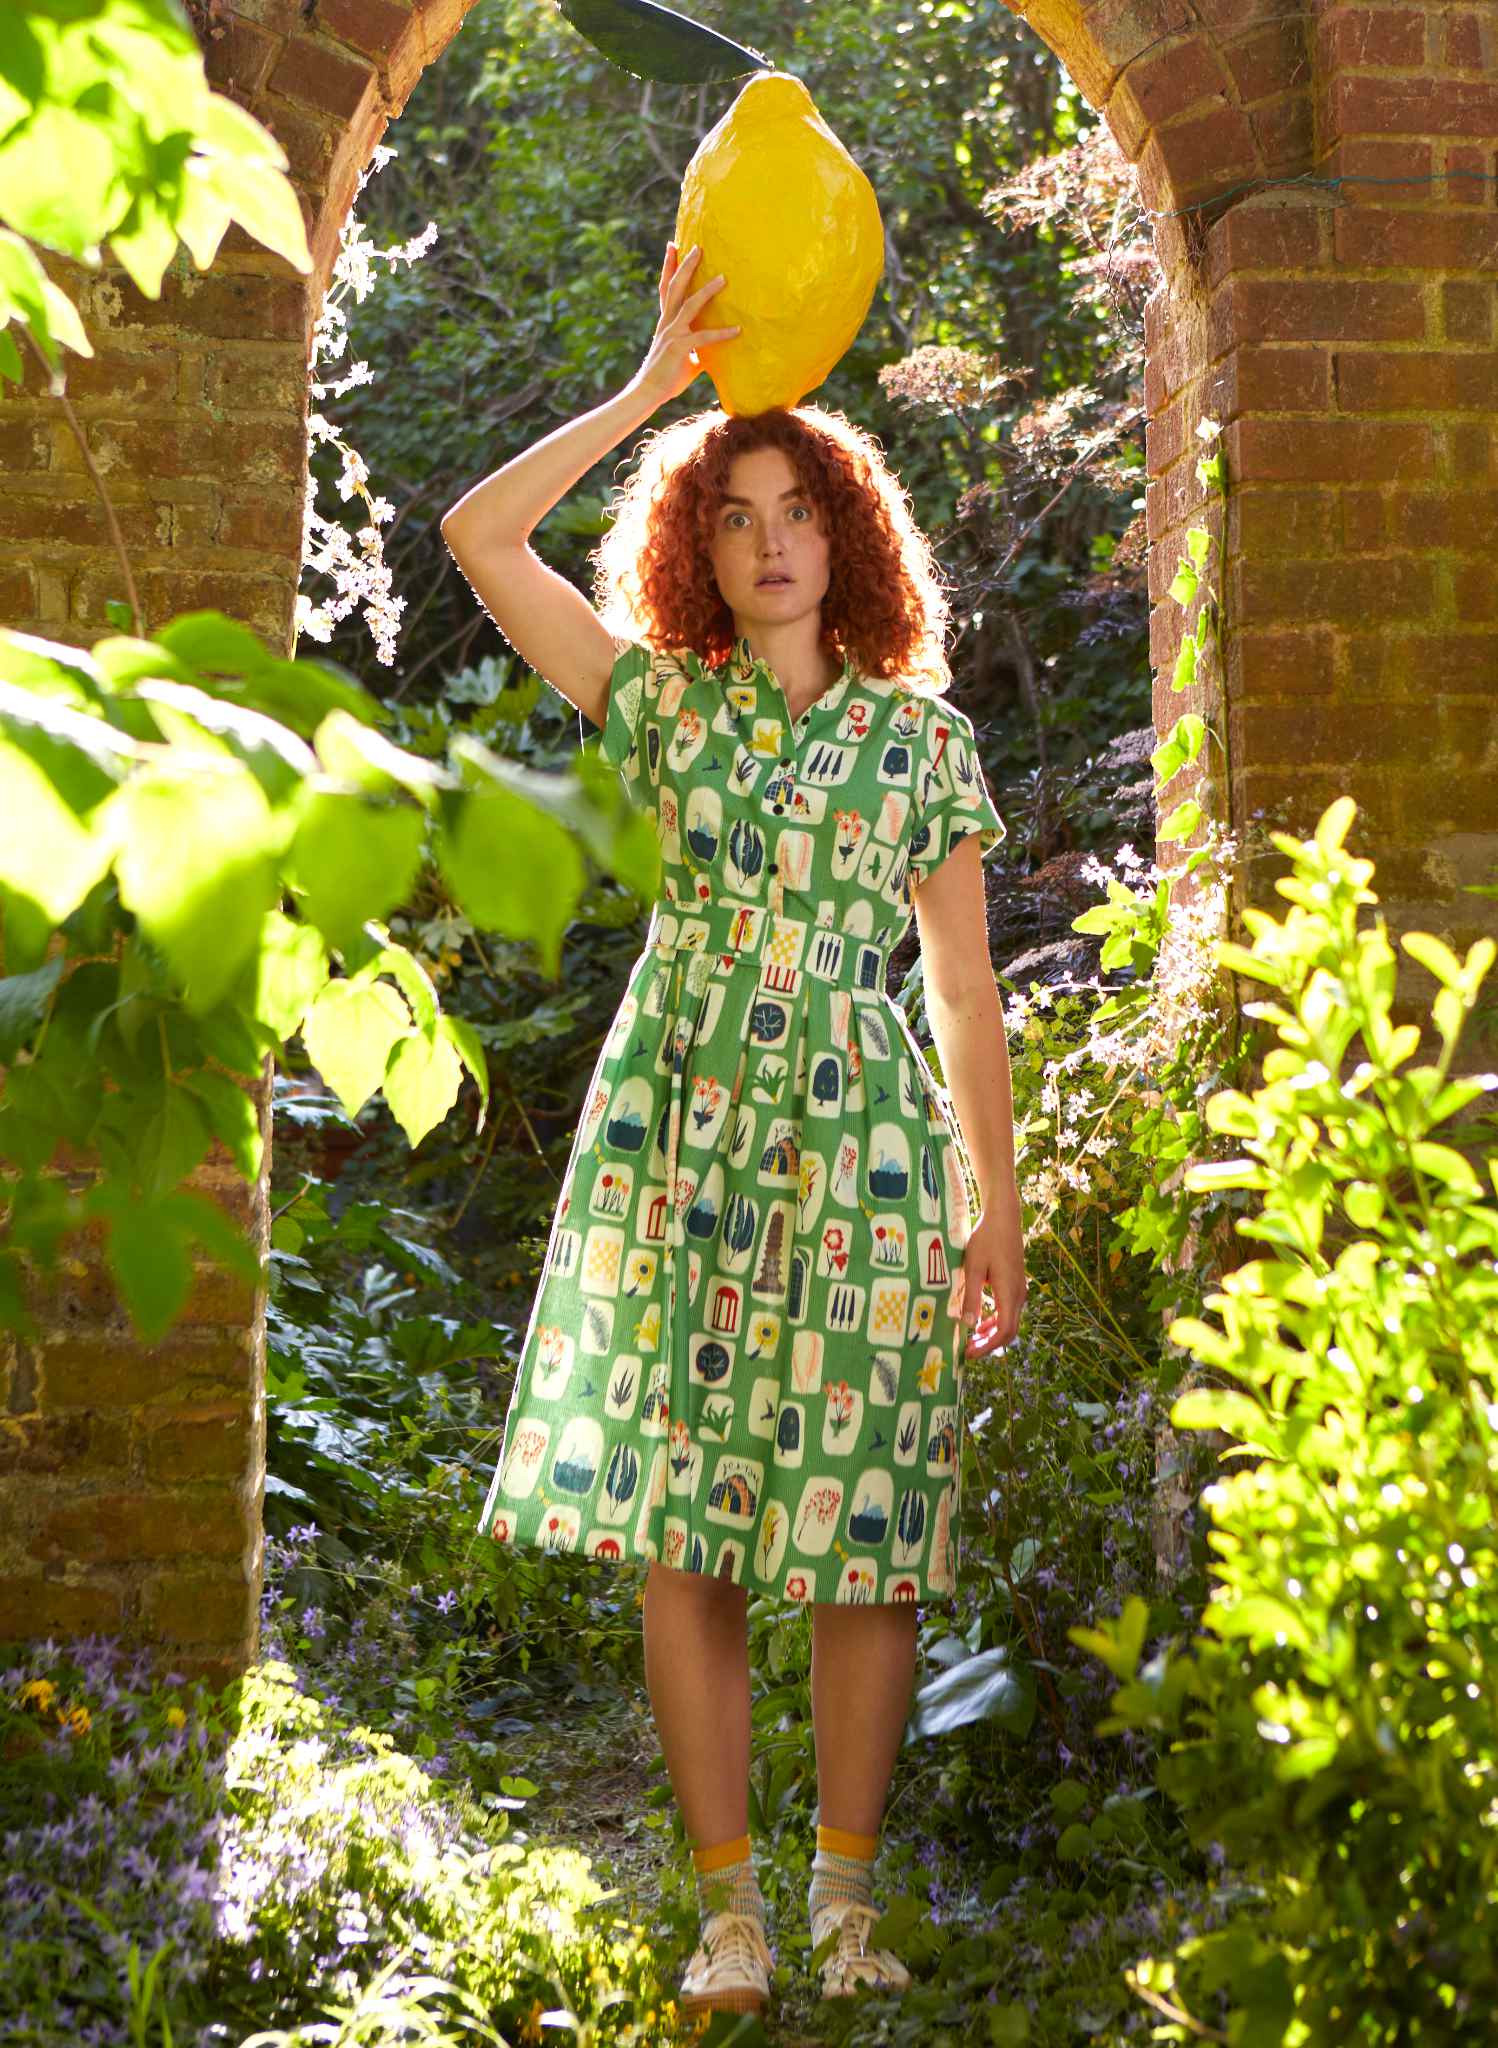 Louise - Green Postcards Dress